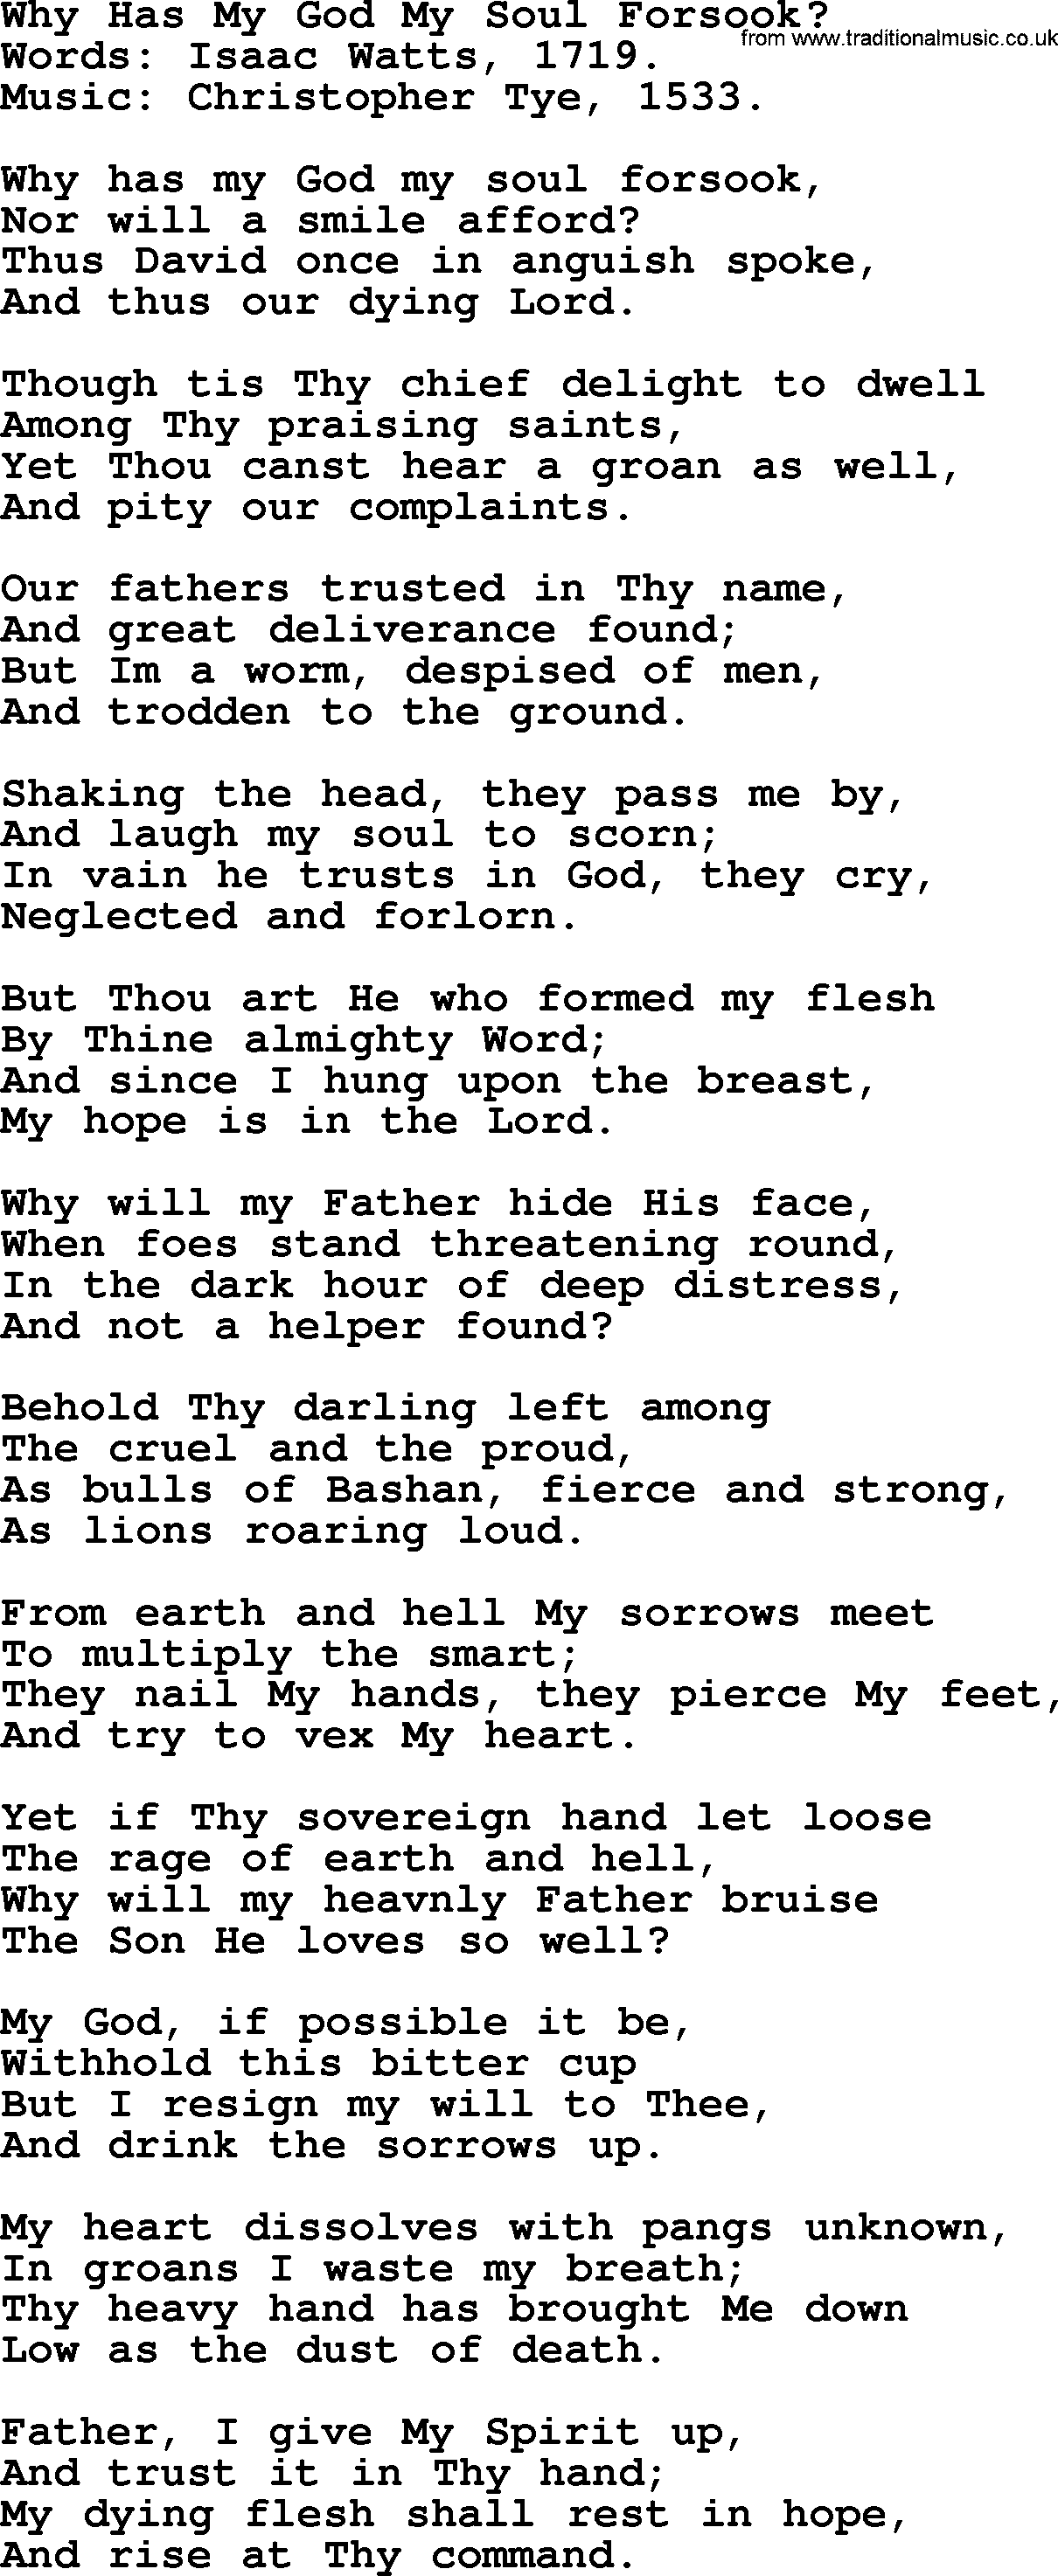 Isaac Watts Christian hymn: Why Has My God My Soul Forsook_- lyricss